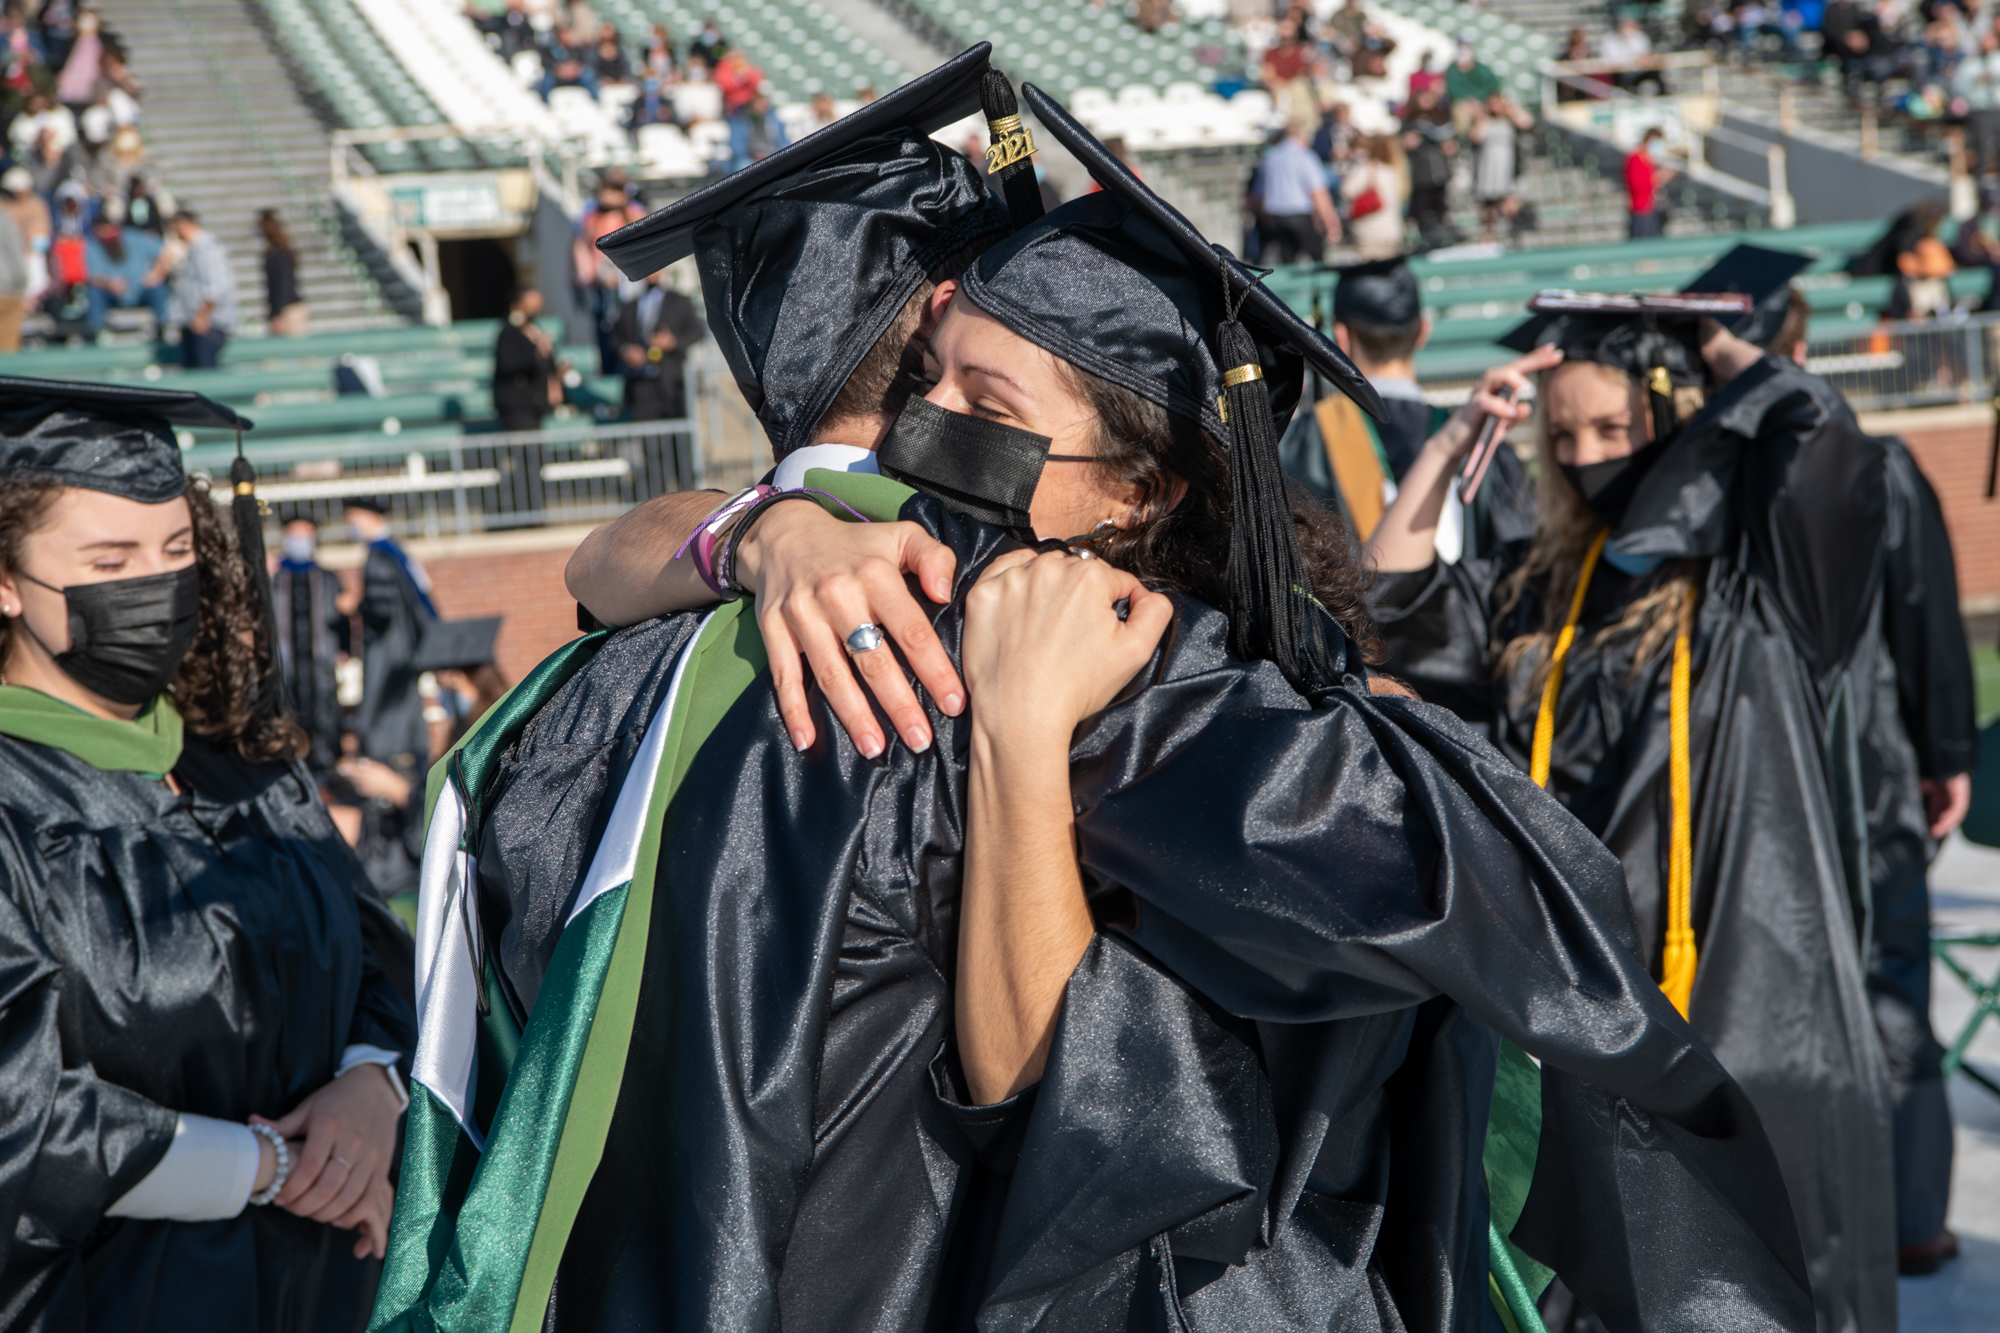 Students share a congratulatory hug during graduation day